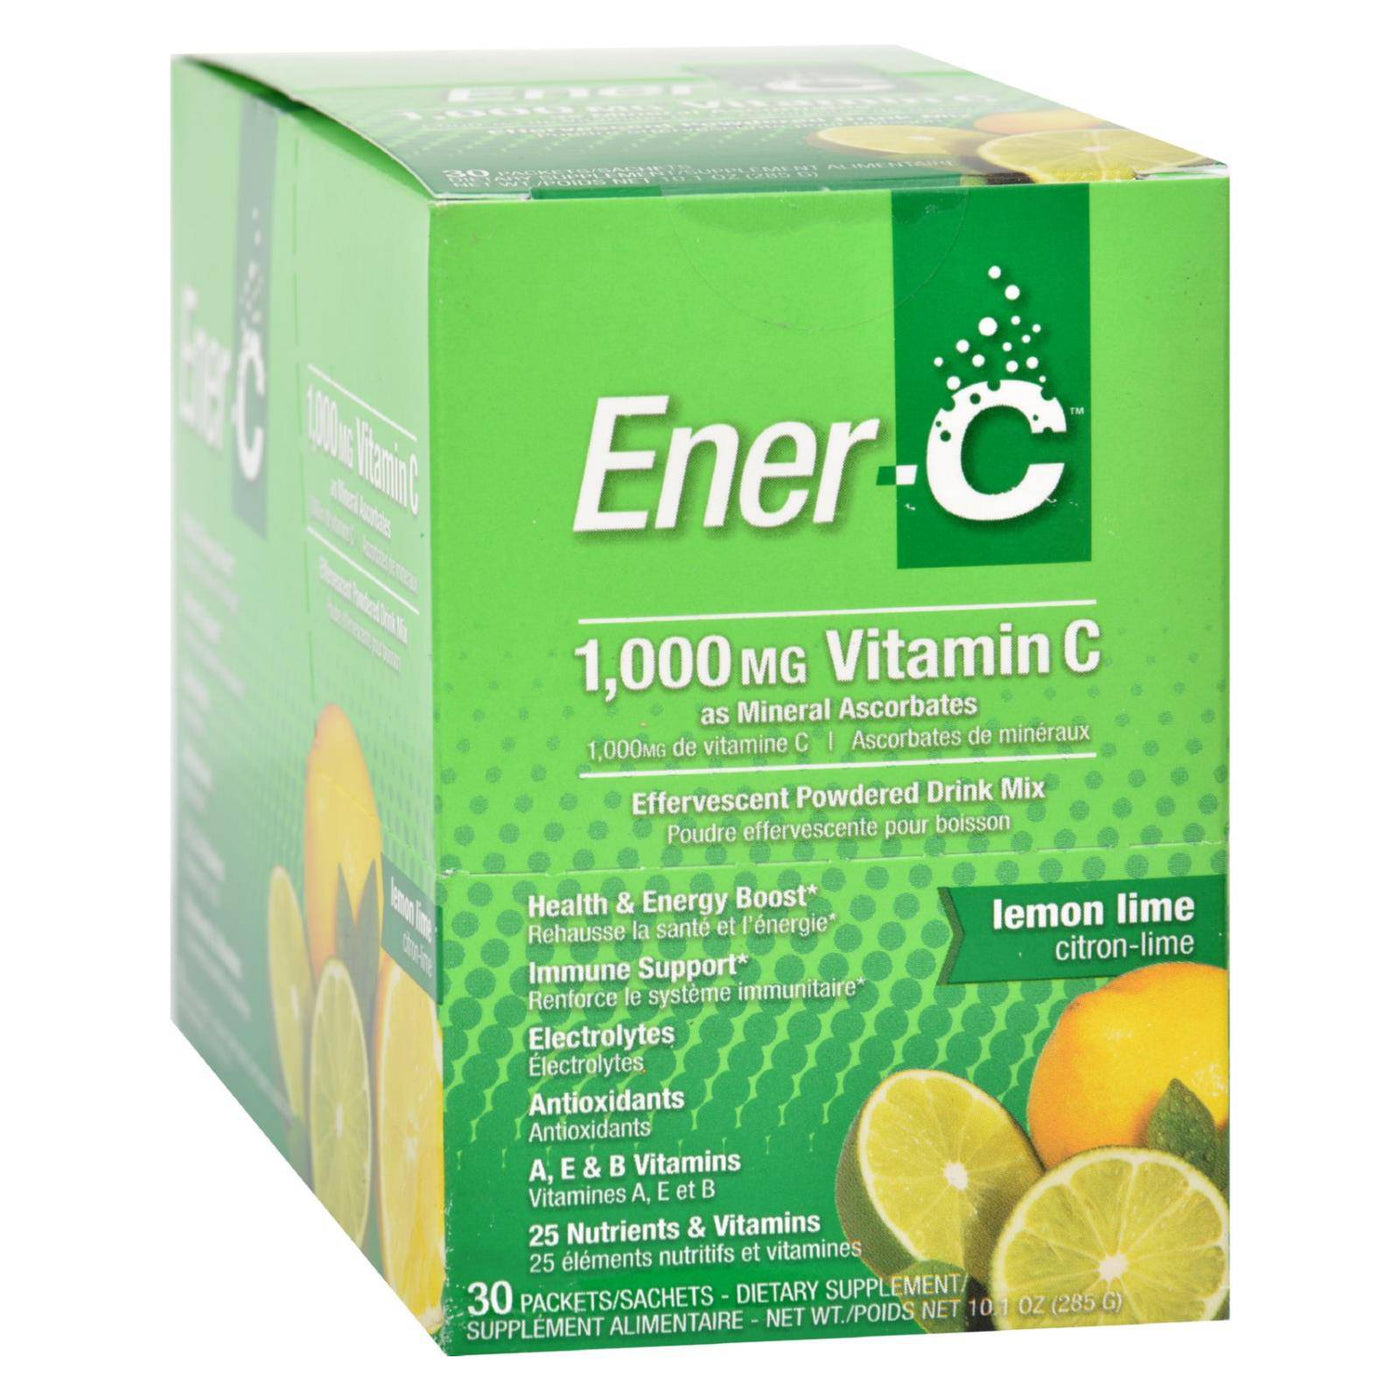 Ener-c Vitamin Drink Mix - Lemon Lime - 1000 Mg - 30 Packets | OnlyNaturals.us